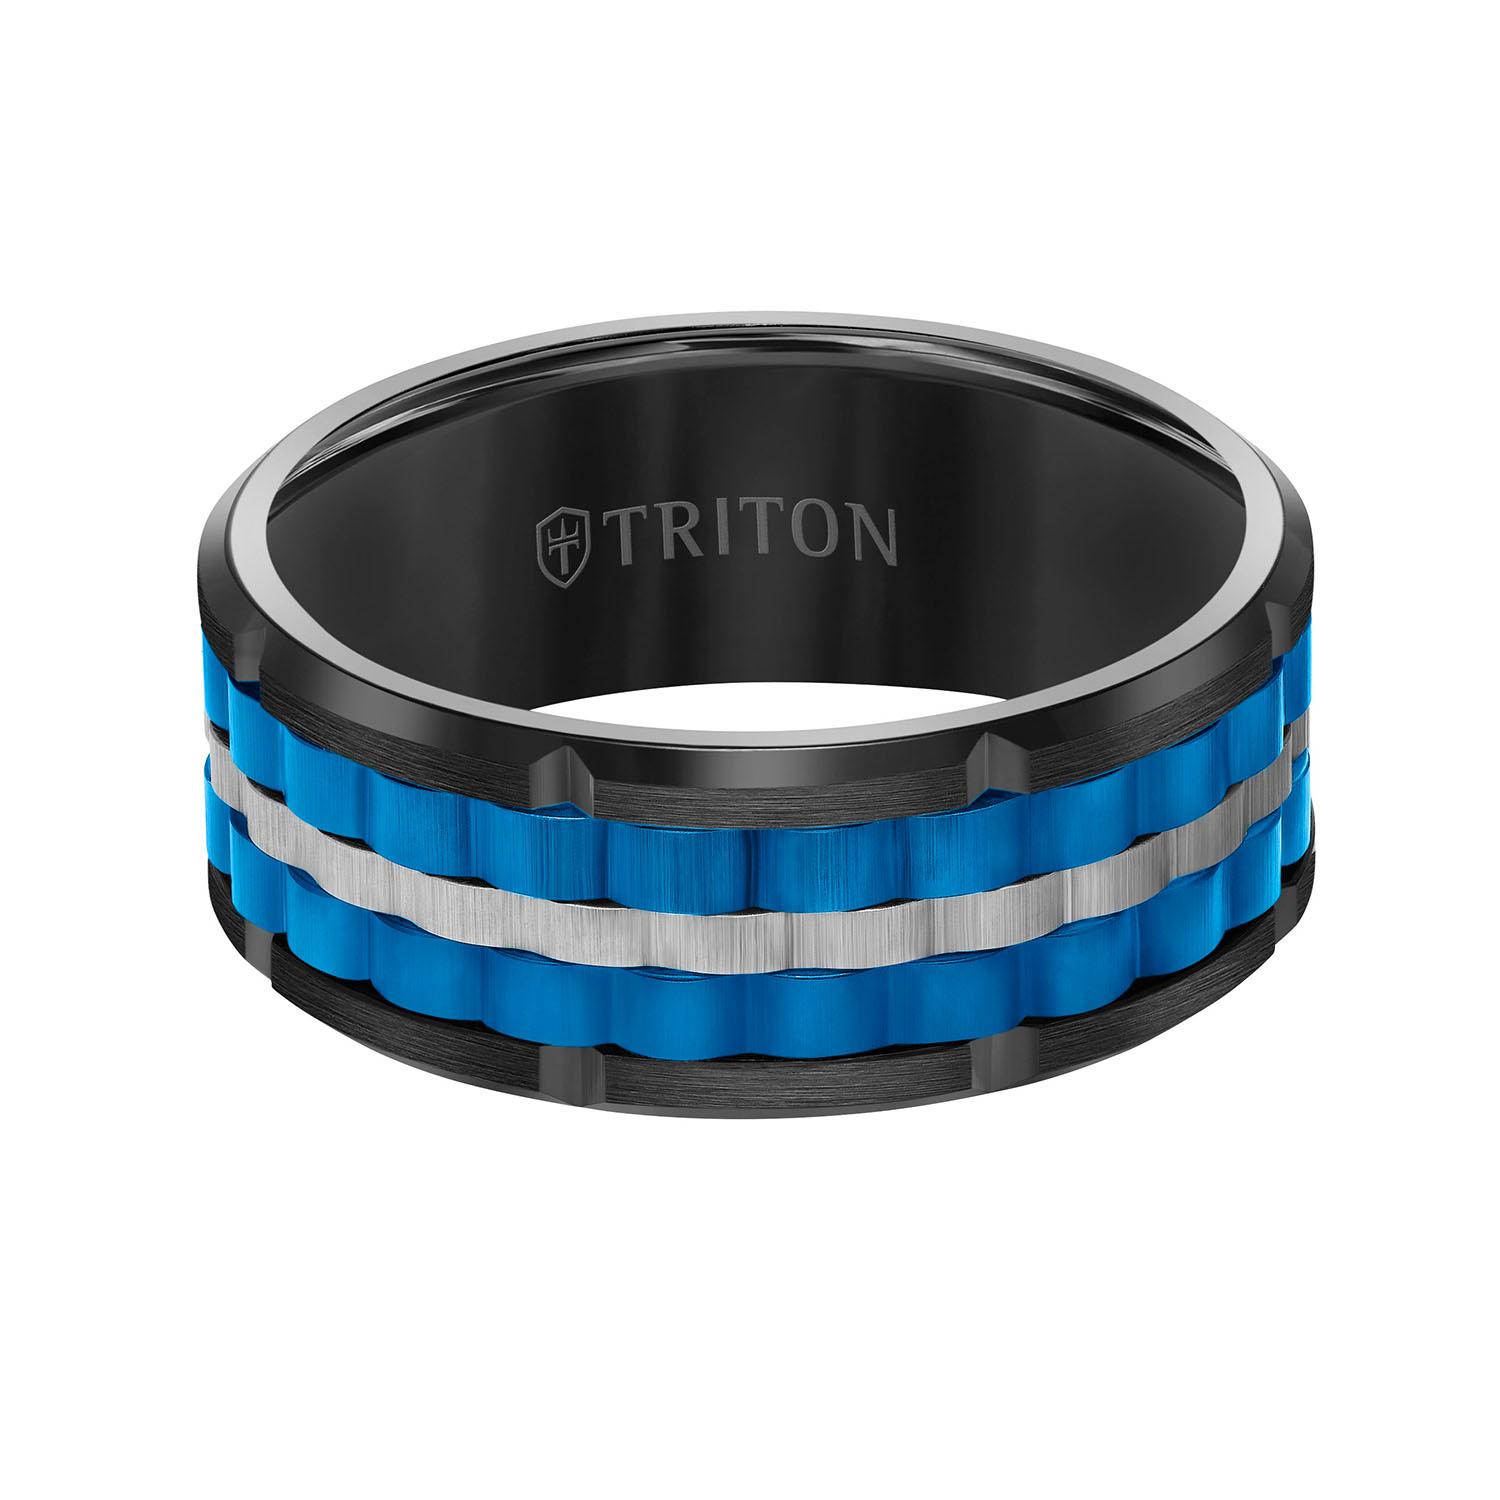 Triton 9mm Tungsten Band With Basketweave Design